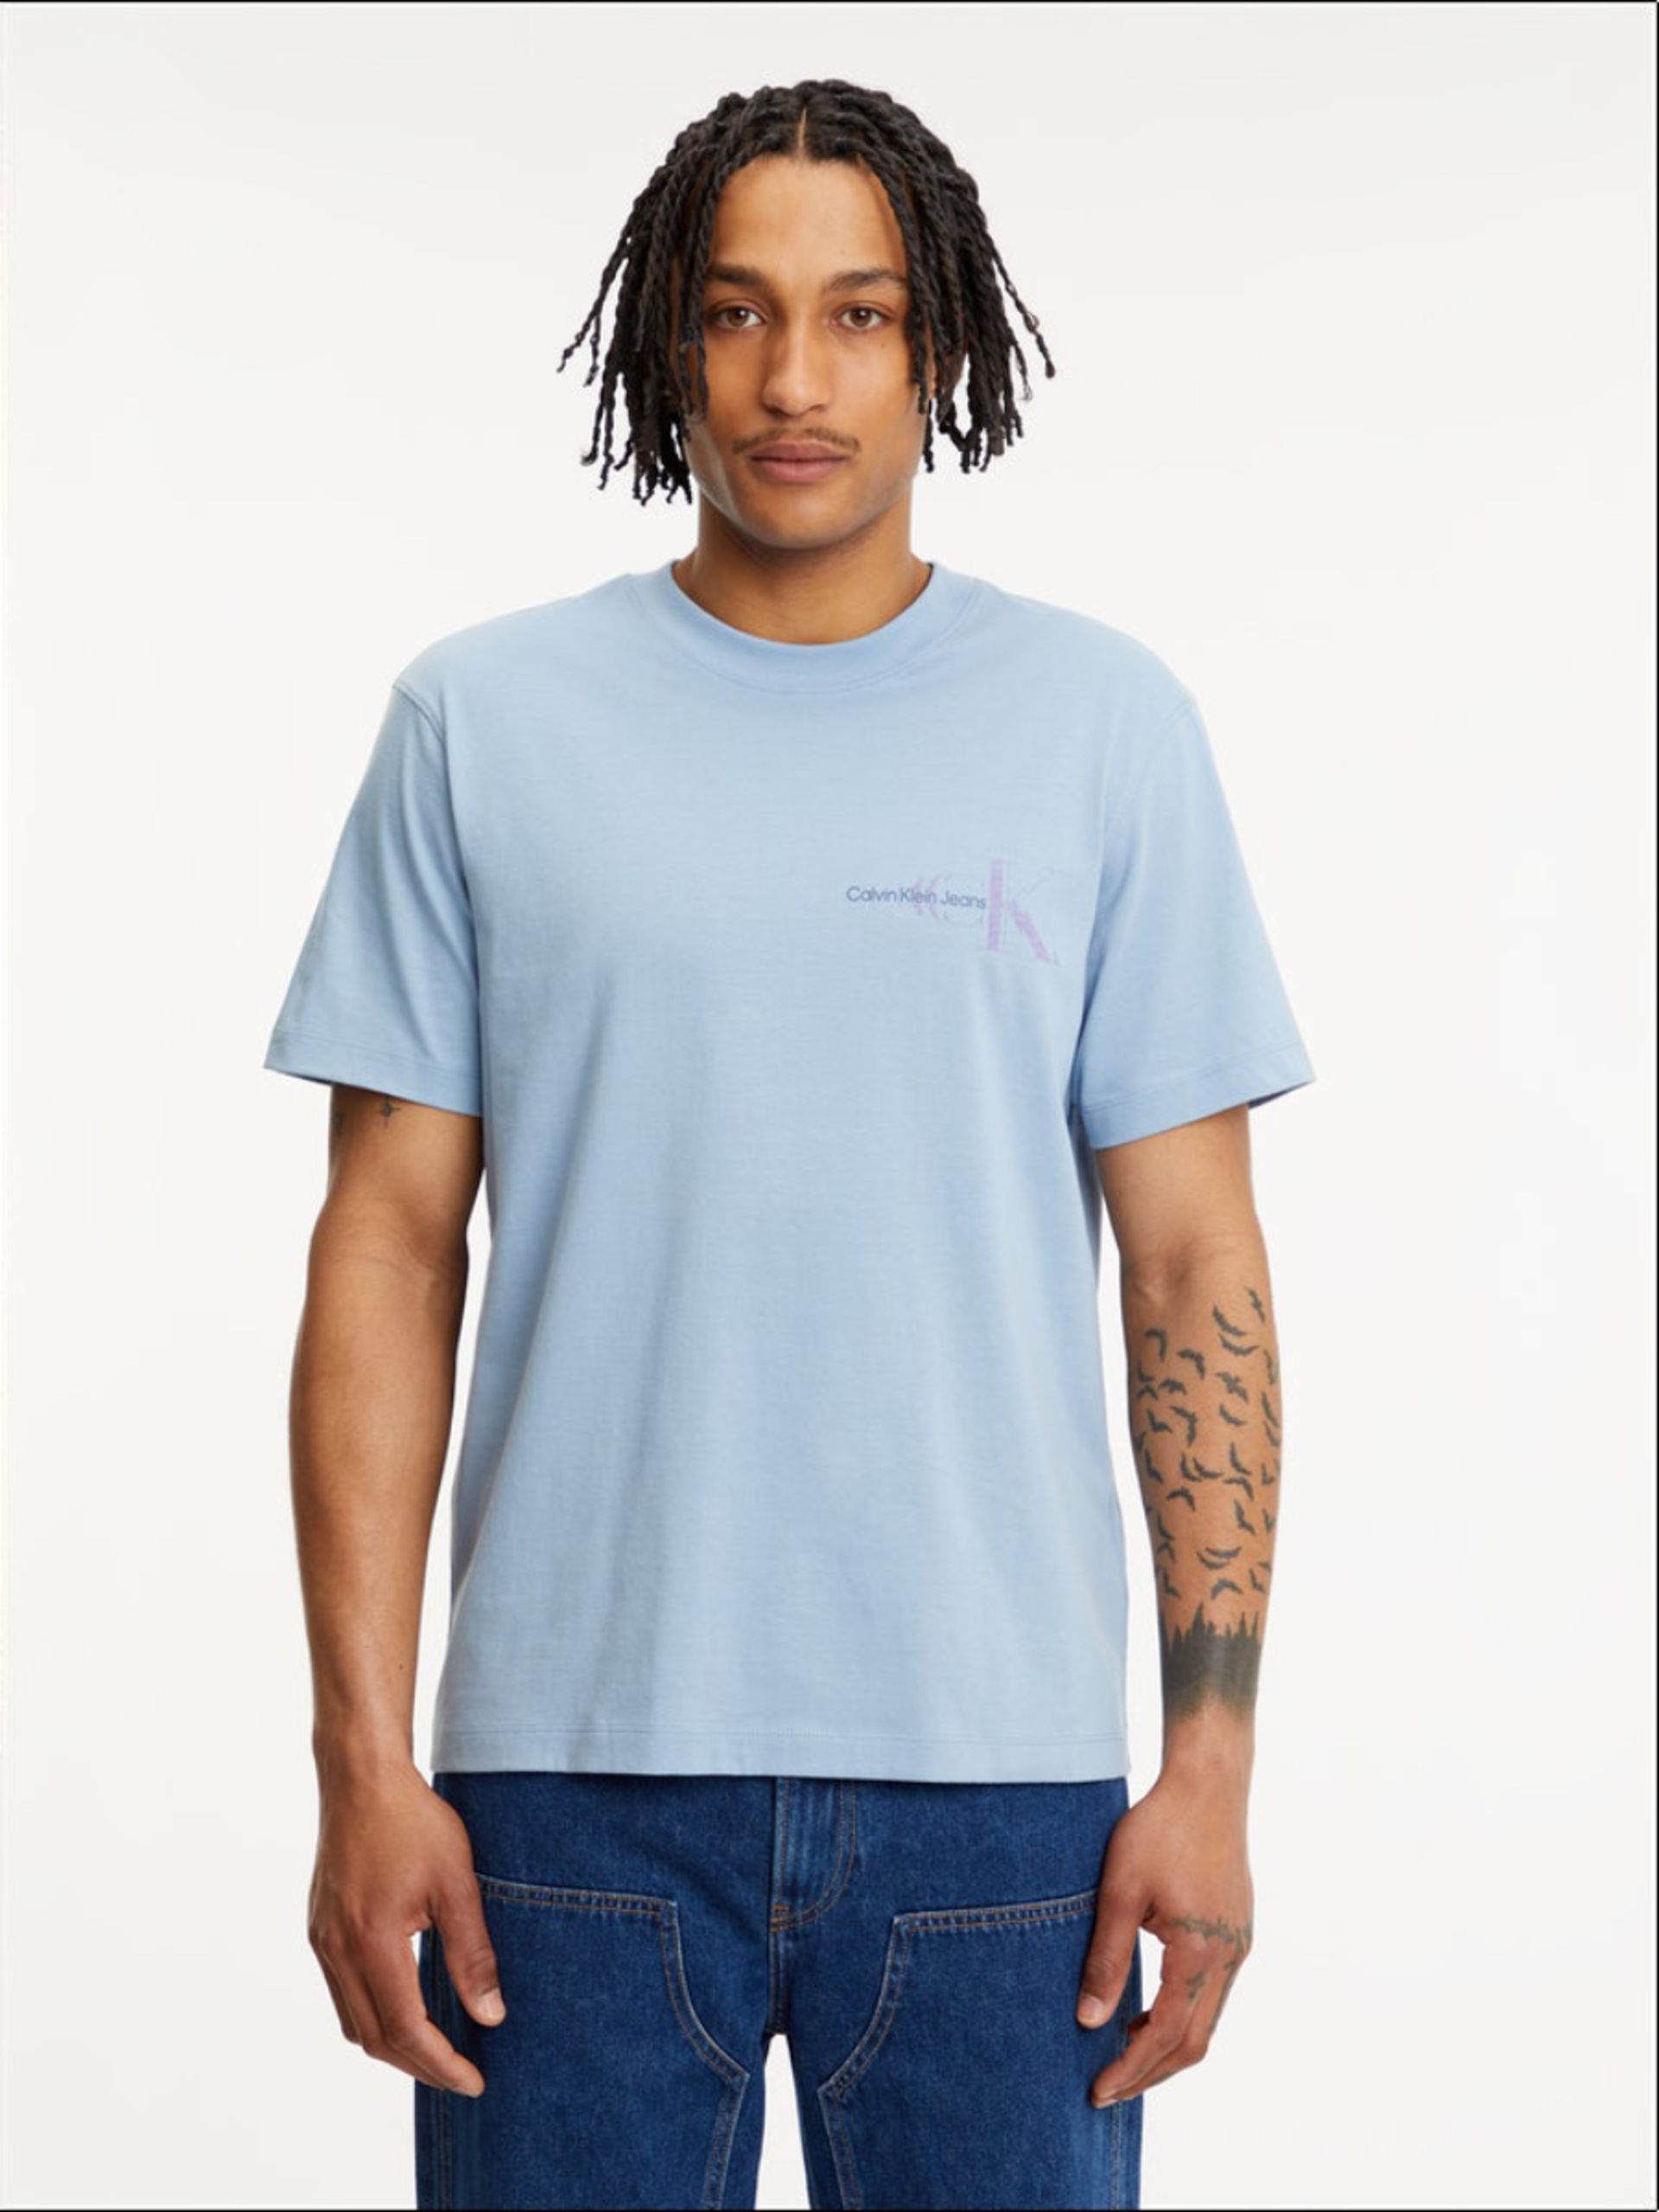 Calvin Klein pánské světle modré tričko - XL (DAR)